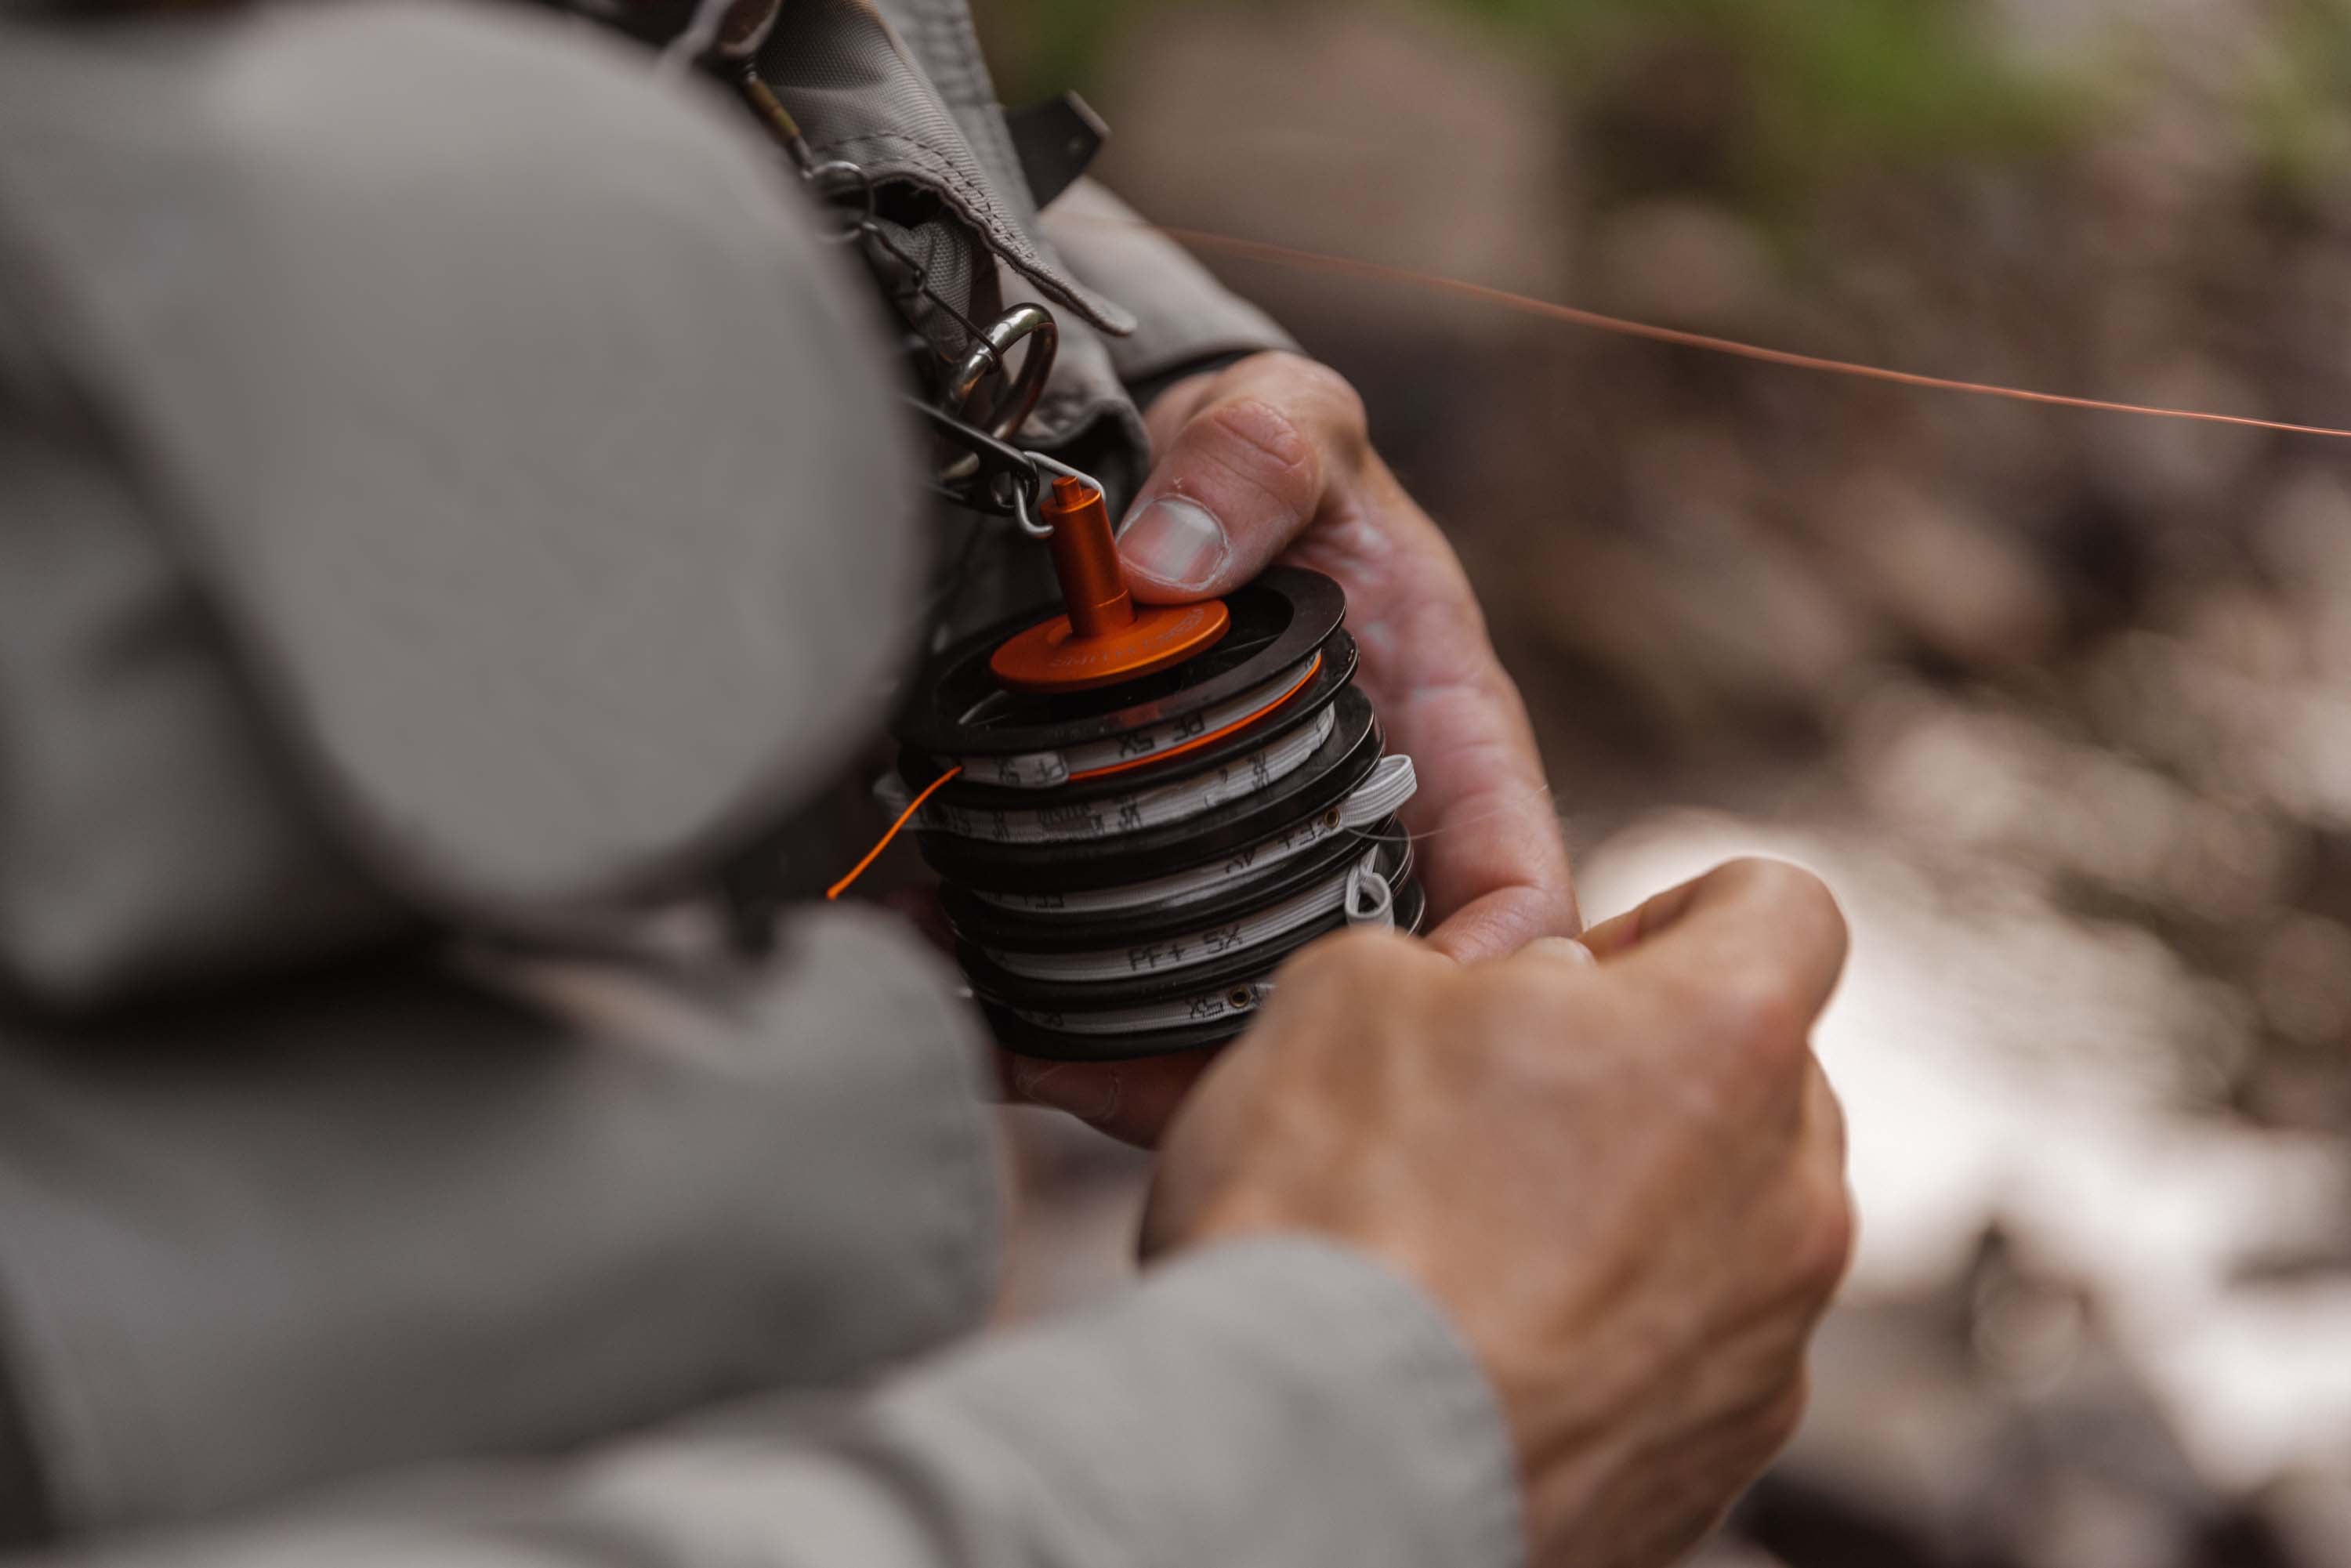 Tippet T Fly Fishing Holder For Storing Multiple Tippet Spools